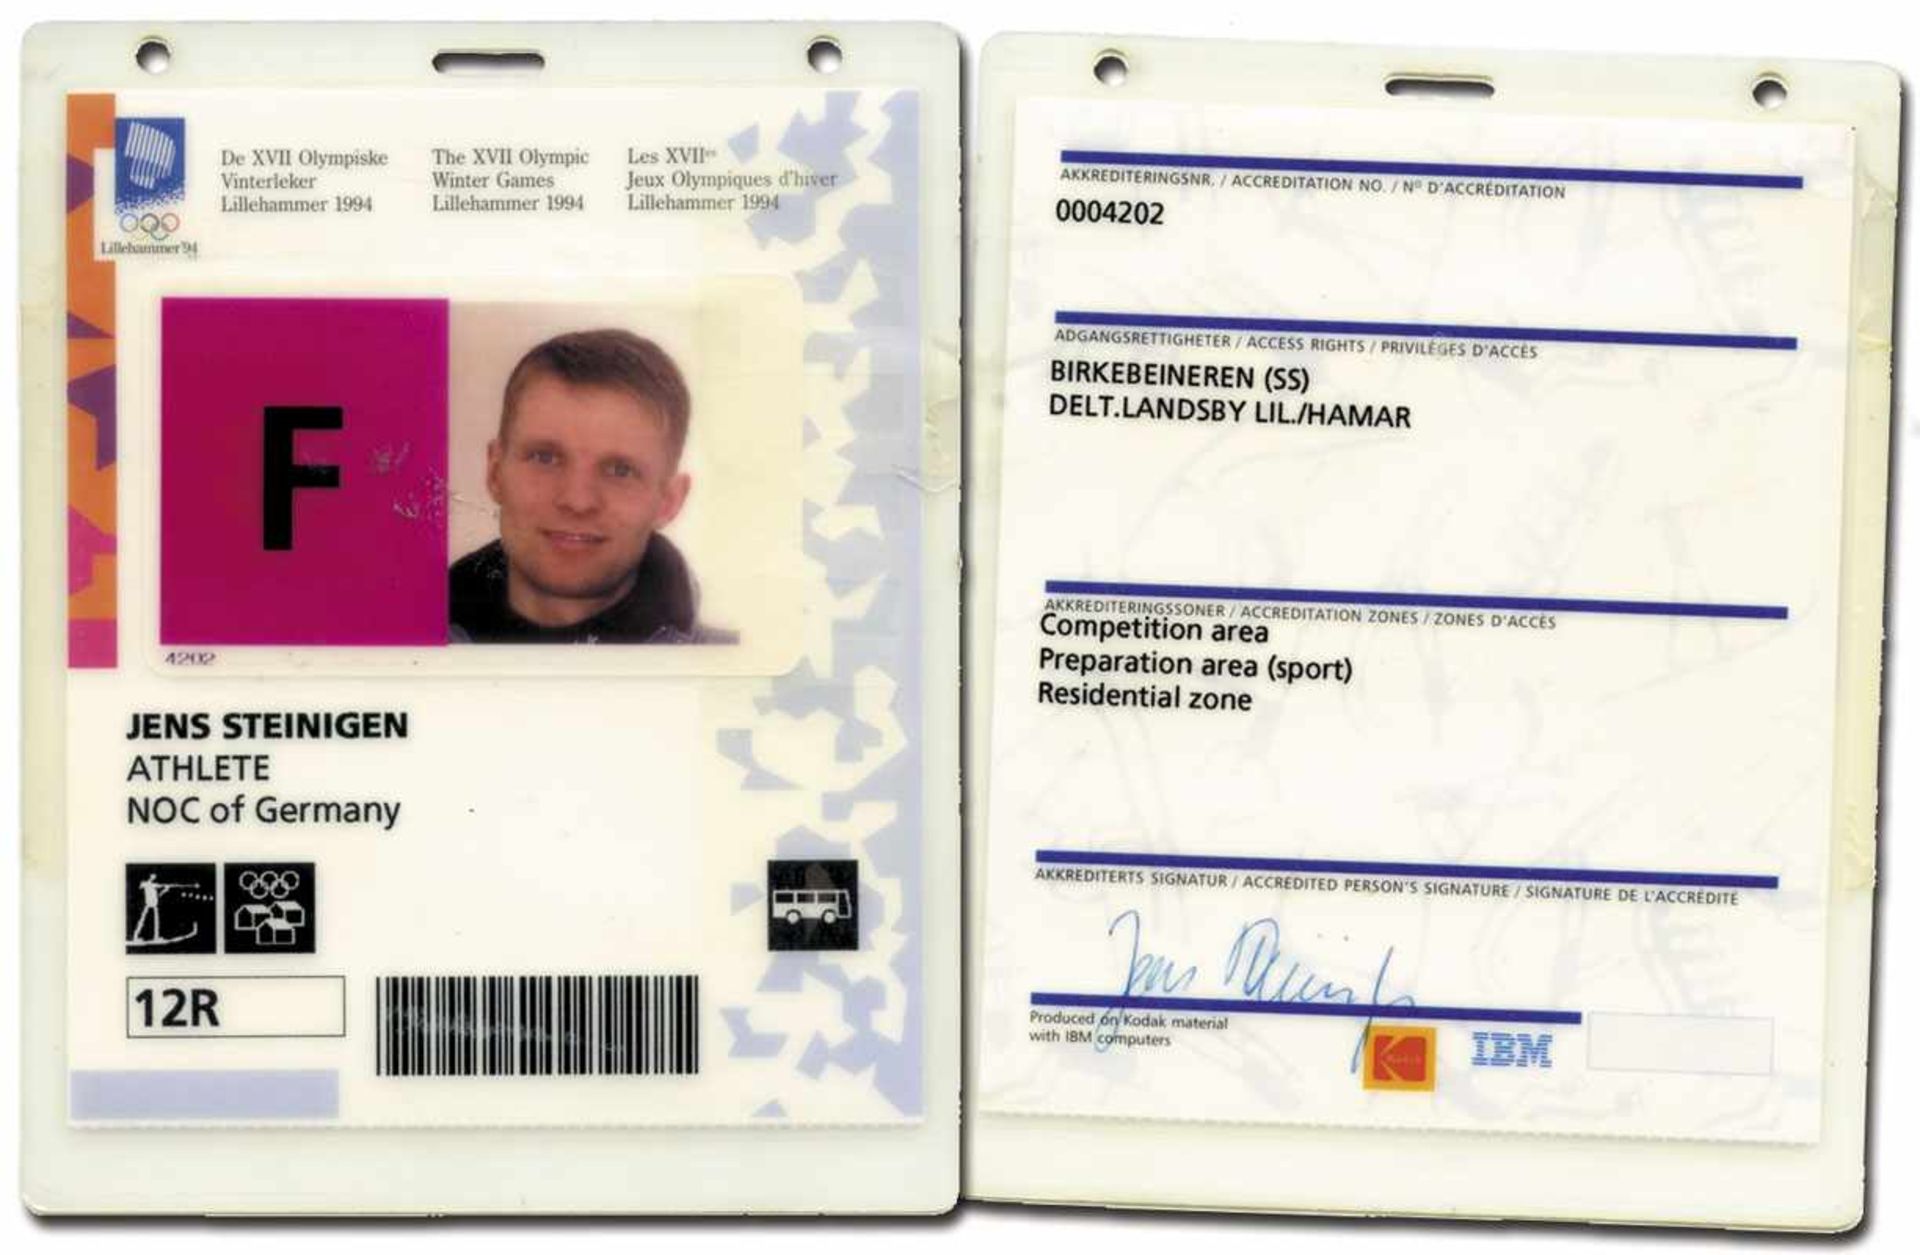 Olympic Games 1994 ID-Card Goldmedal winner - Original Olympic Games ID card for the Olympic Games